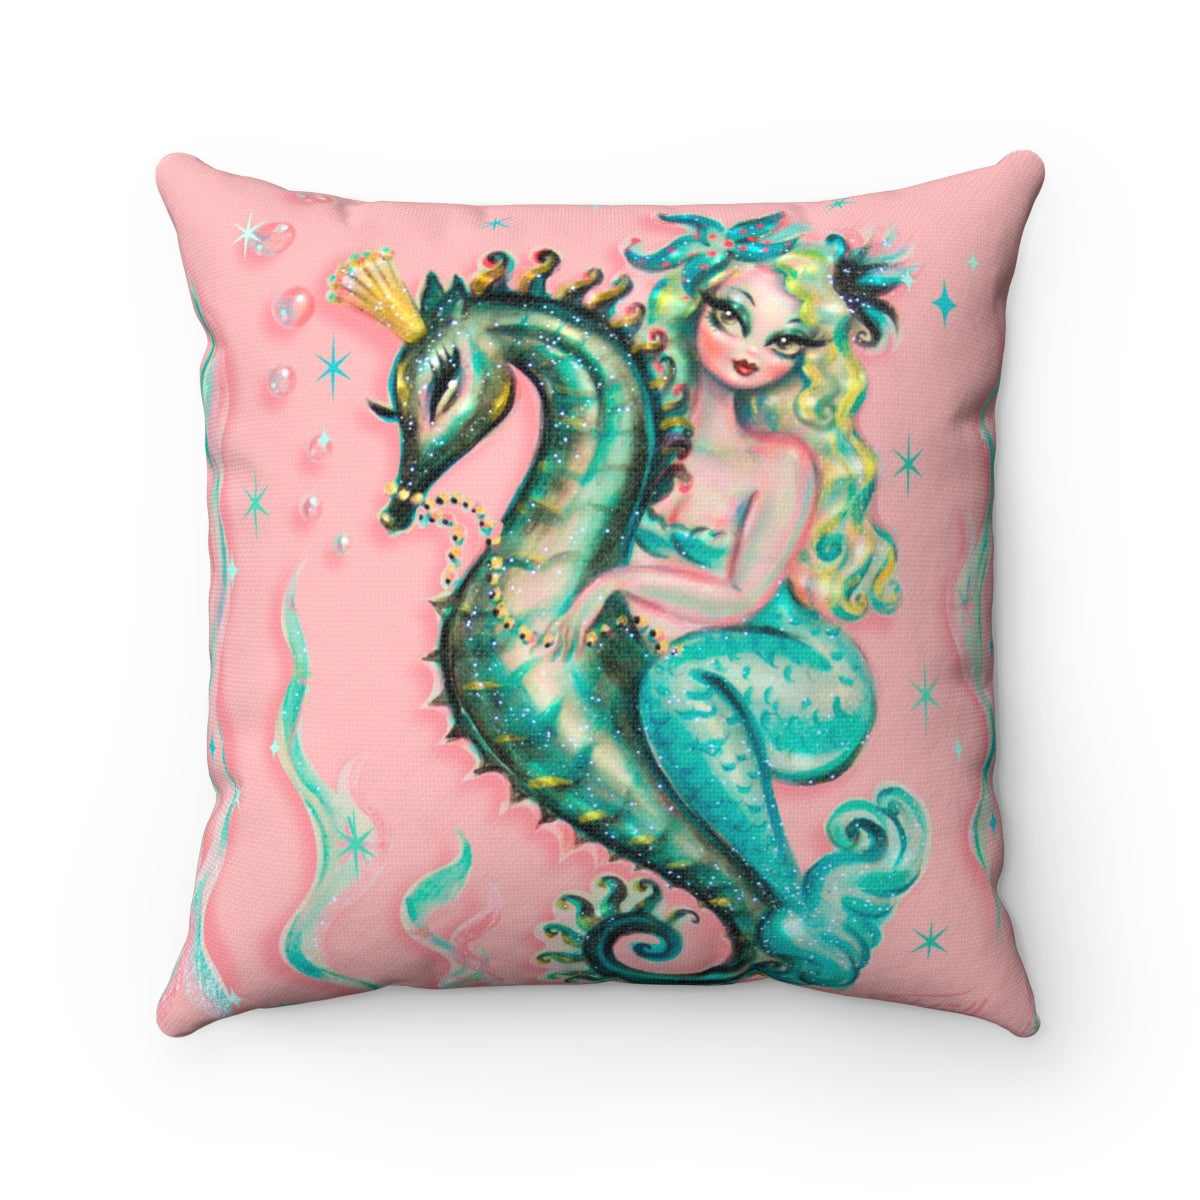 Blue Mermaid Riding a Seahorse Prince • Square Pillow